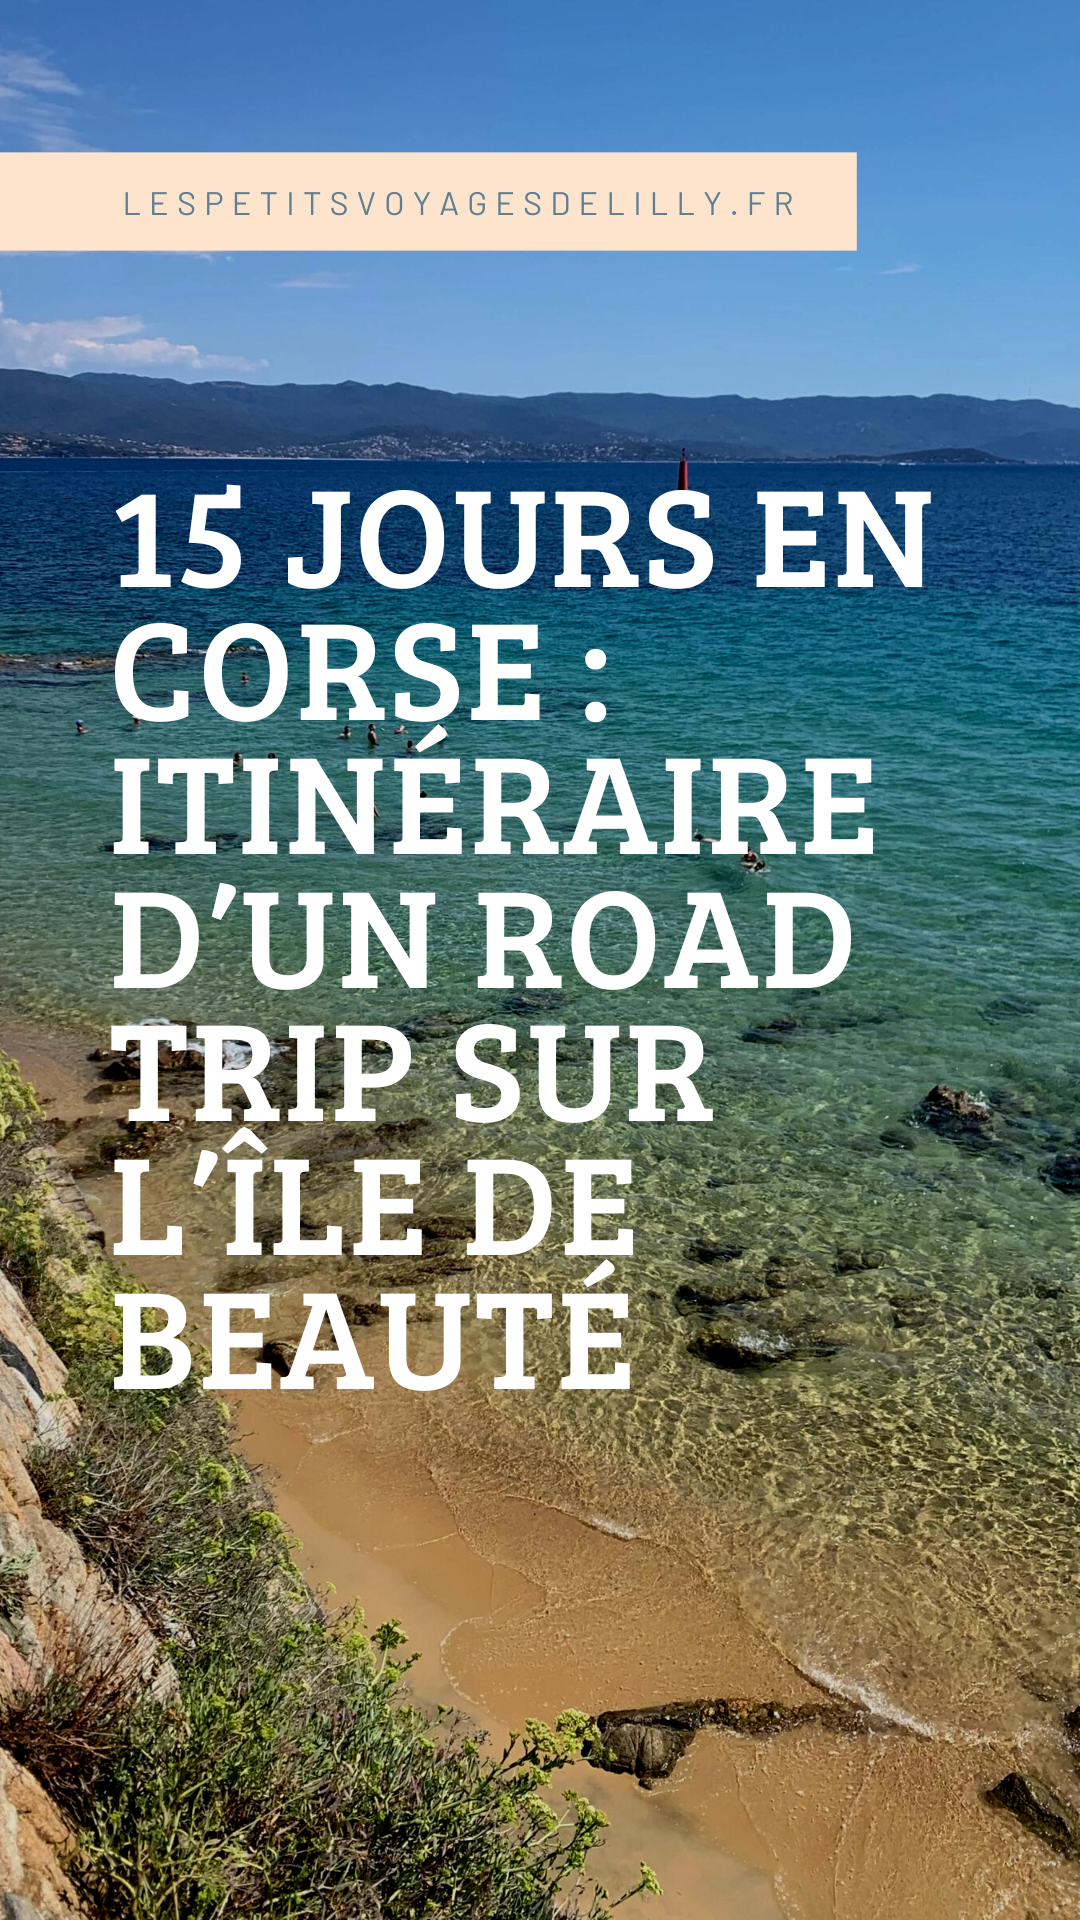 Corse trip V3 - Le blog de lefouduroi